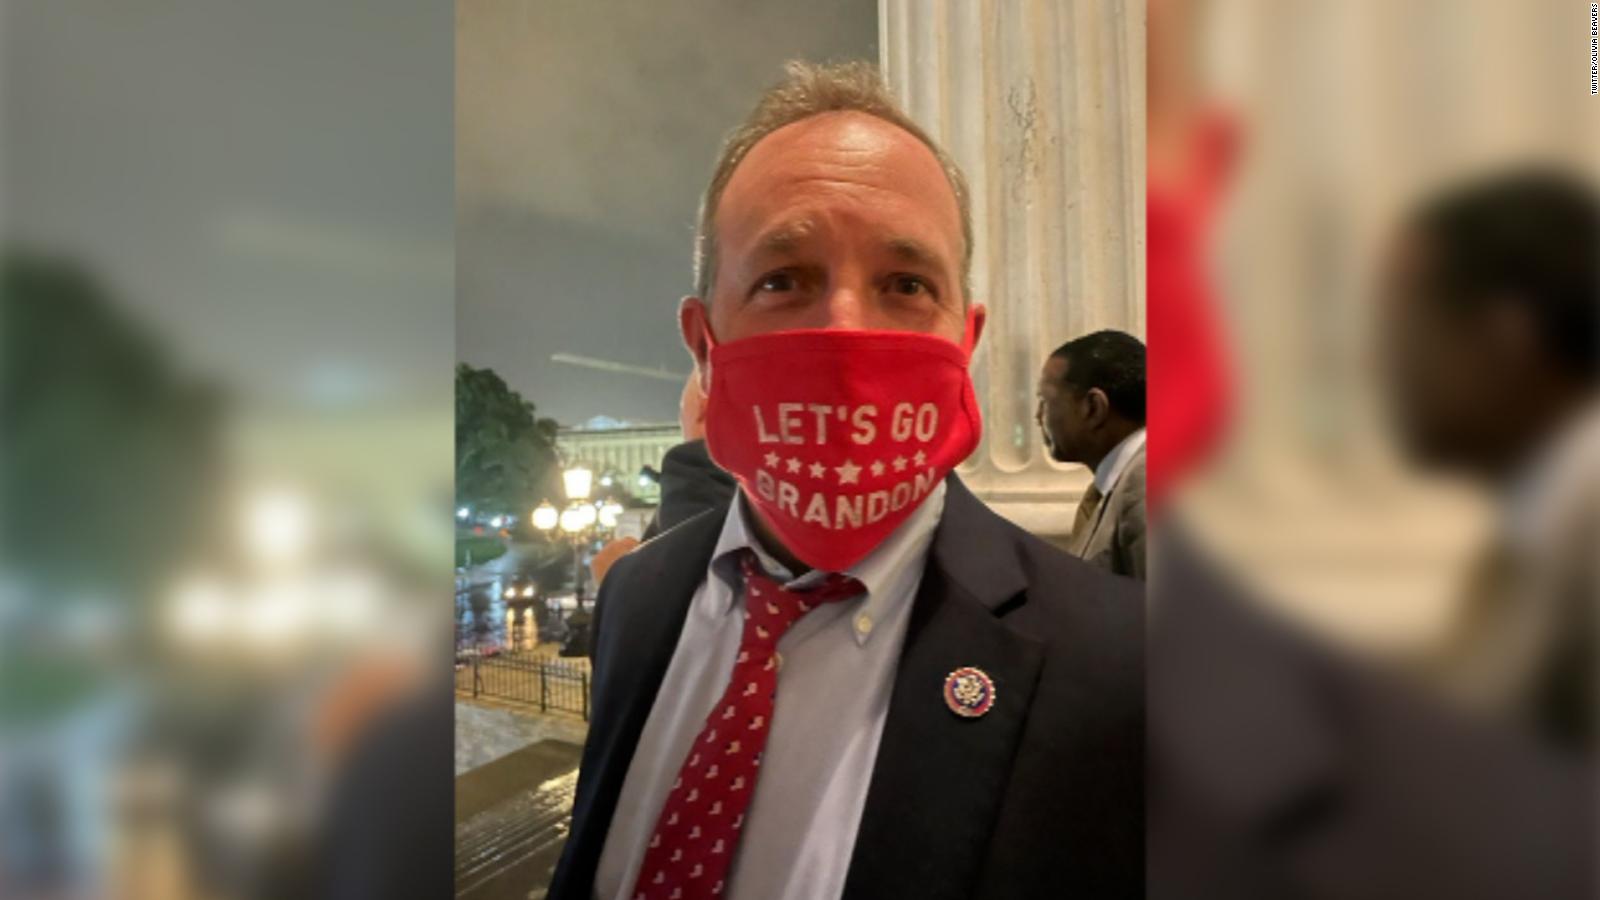 GOP rep. wears 'Let's go Brandon' mask on House floor with not-so-secret  message - CNN Video